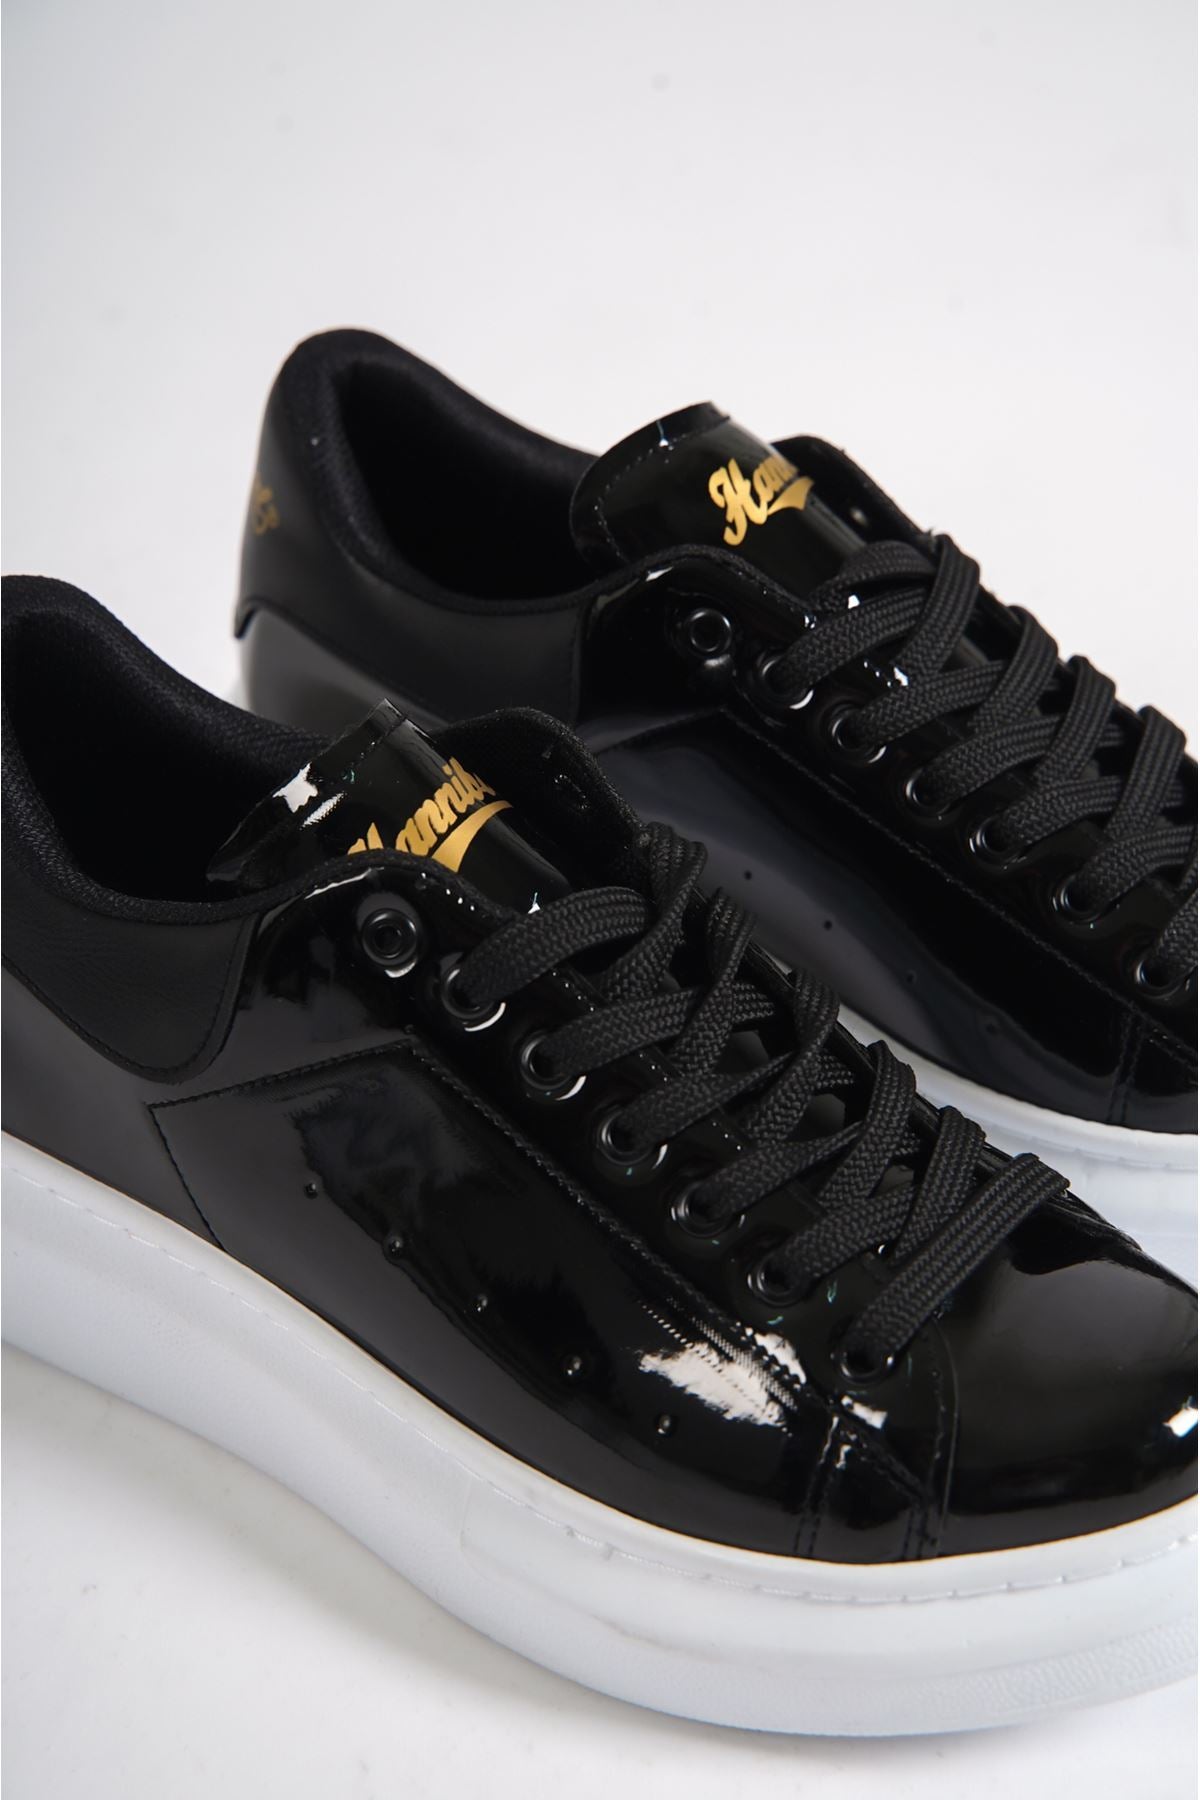 Men's Castor Black Patent Leather Sneaker Shoes - STREETMODE™